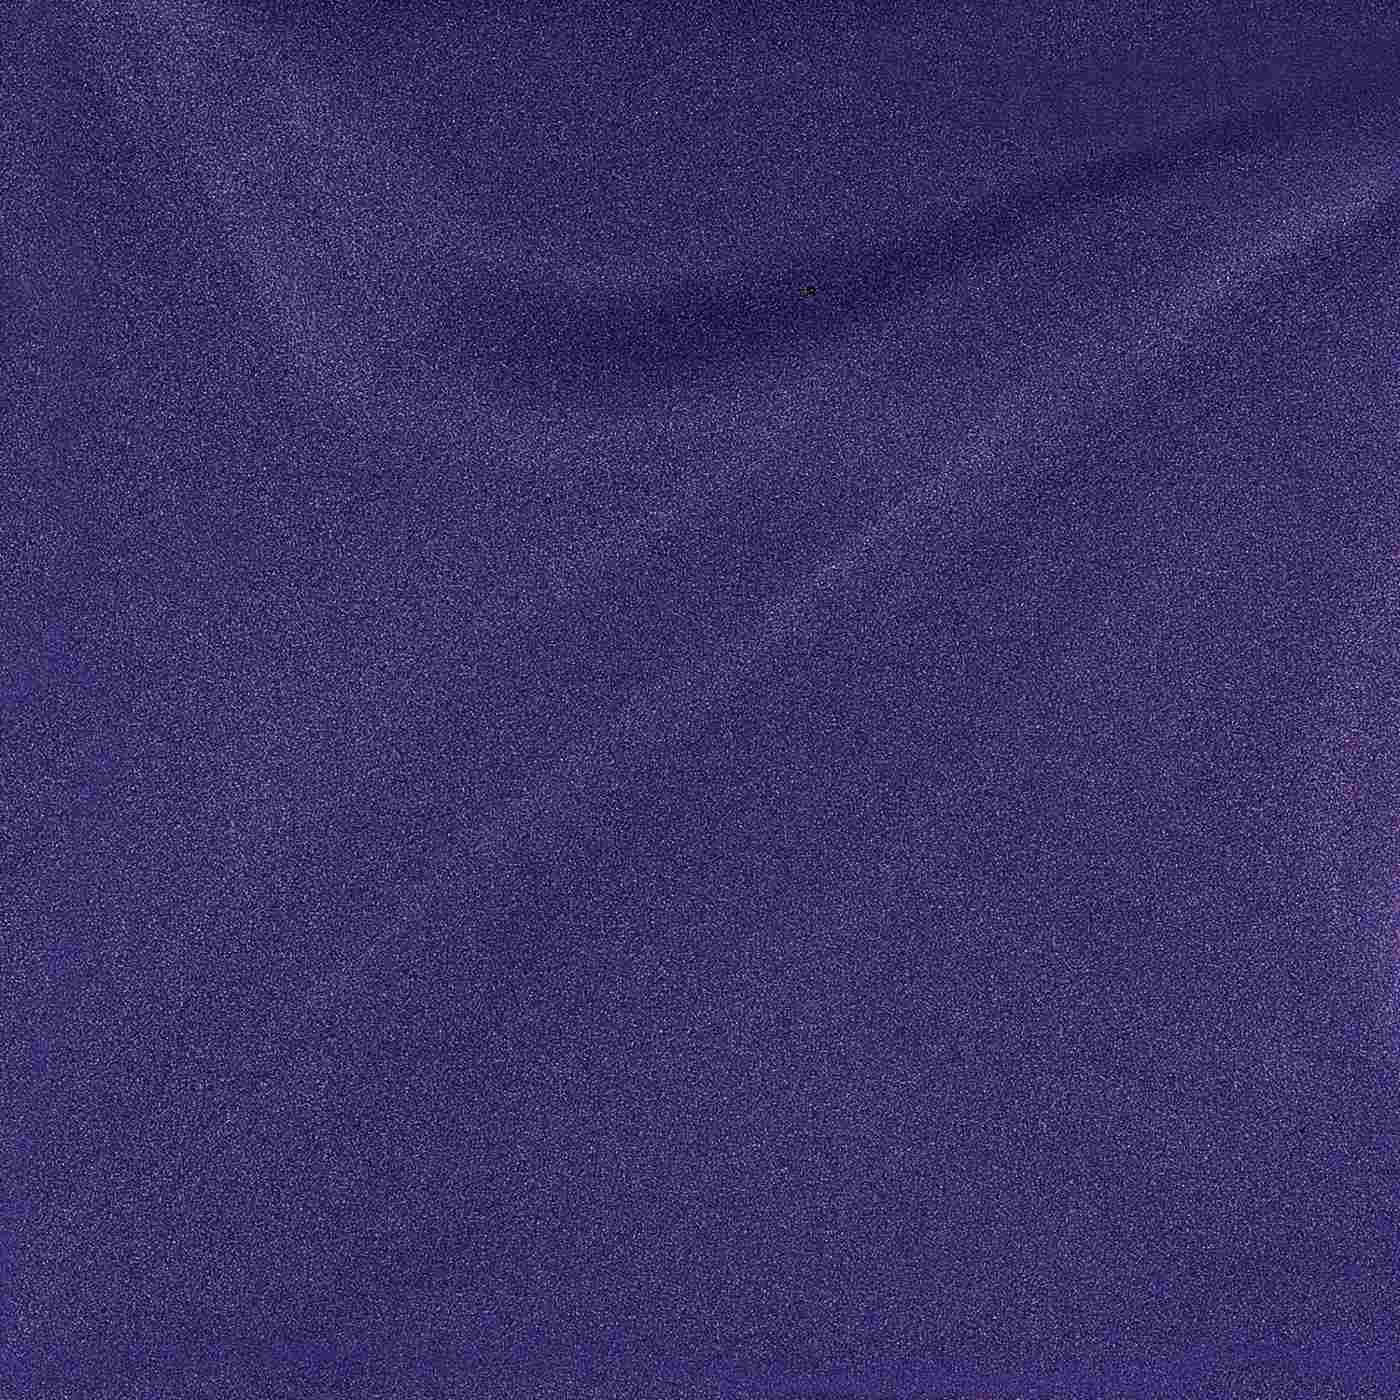 Sally Hansen Miracle Gel Nail Polish - Purplexed; image 6 of 6